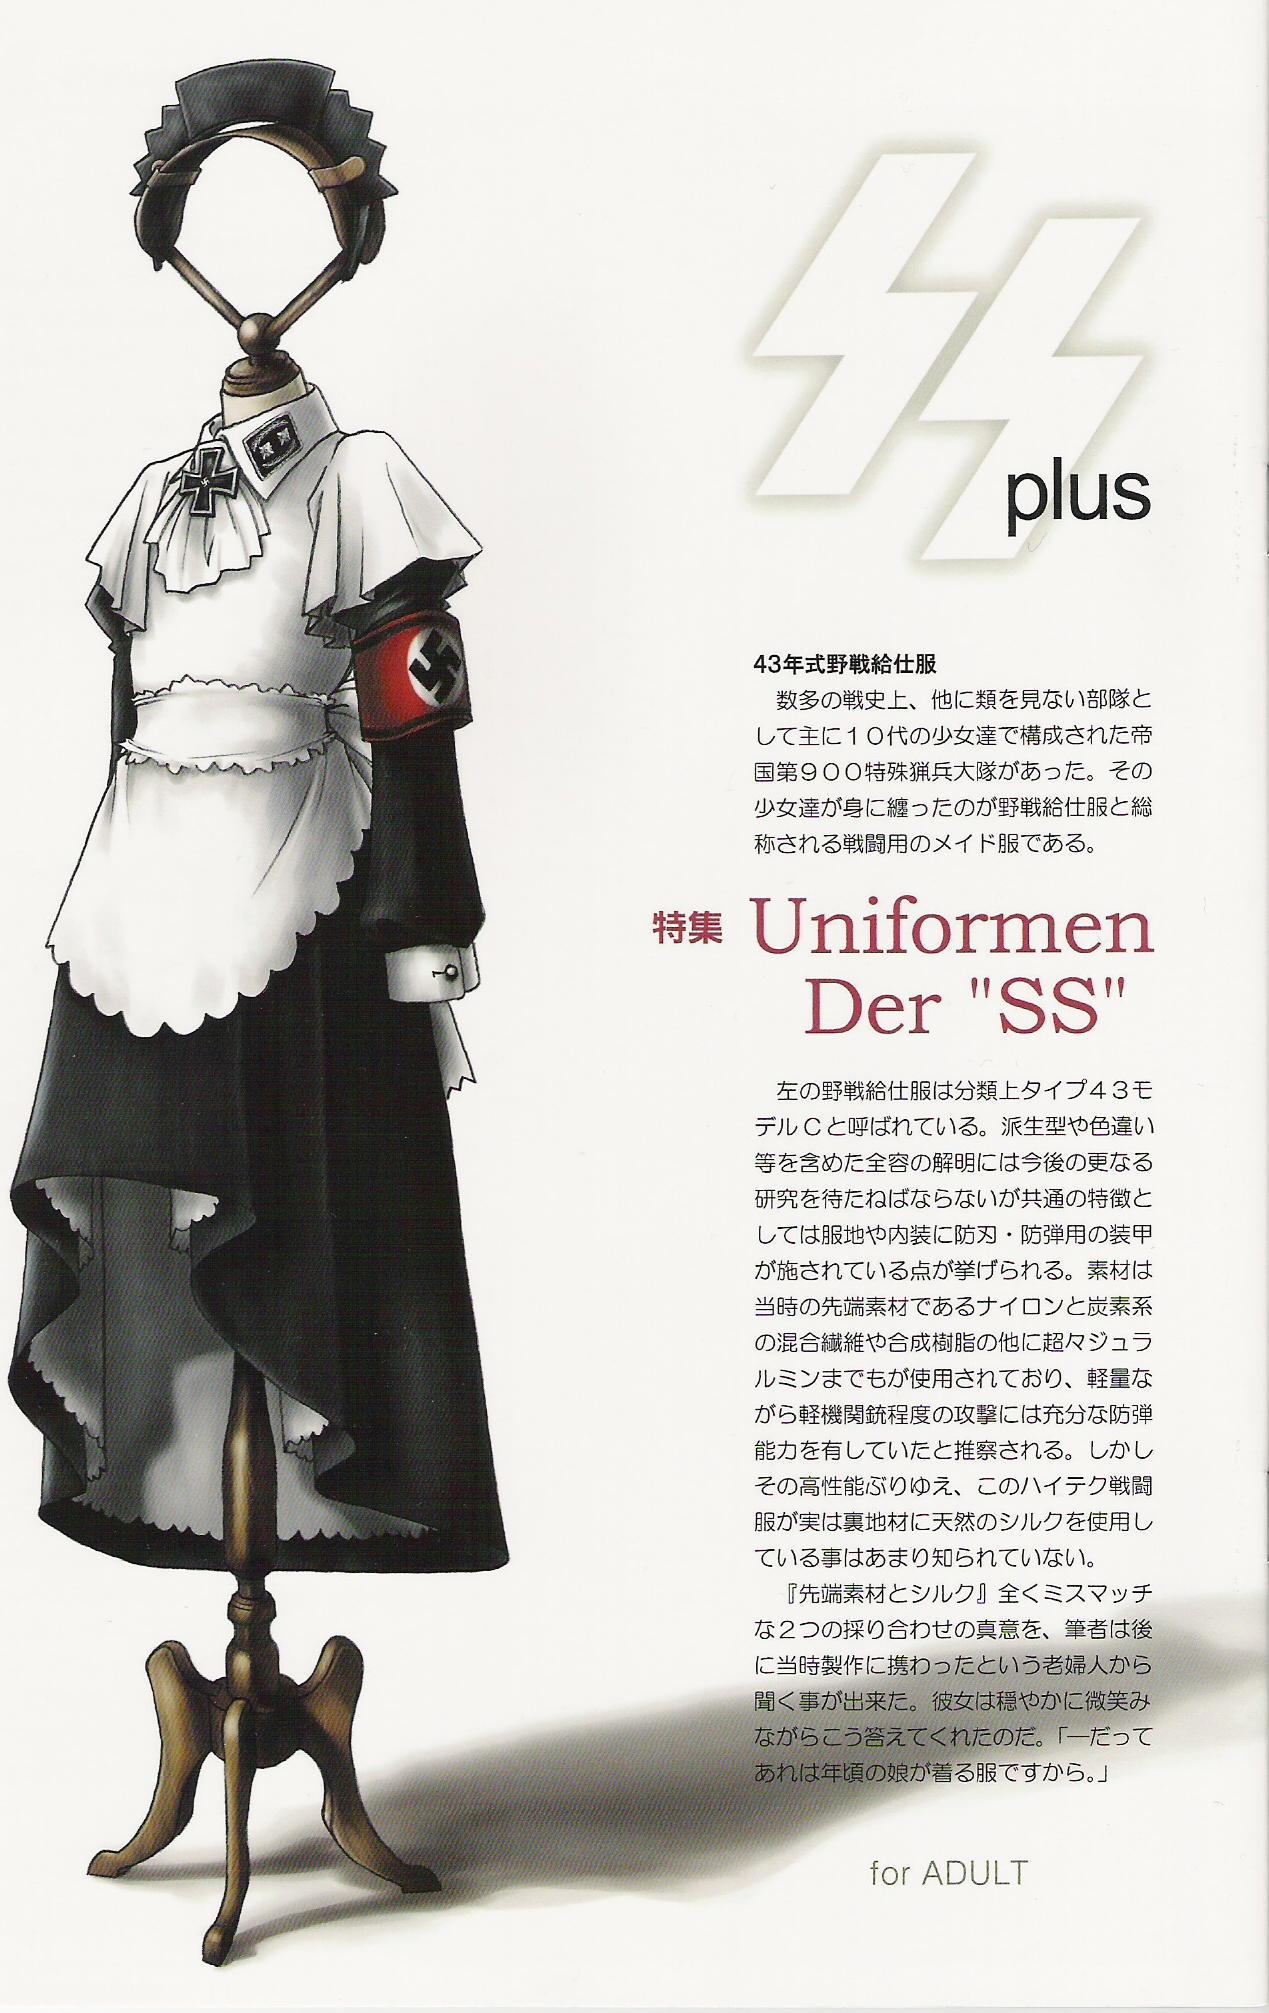 SS 2 Plus Uniformen Der SS 0